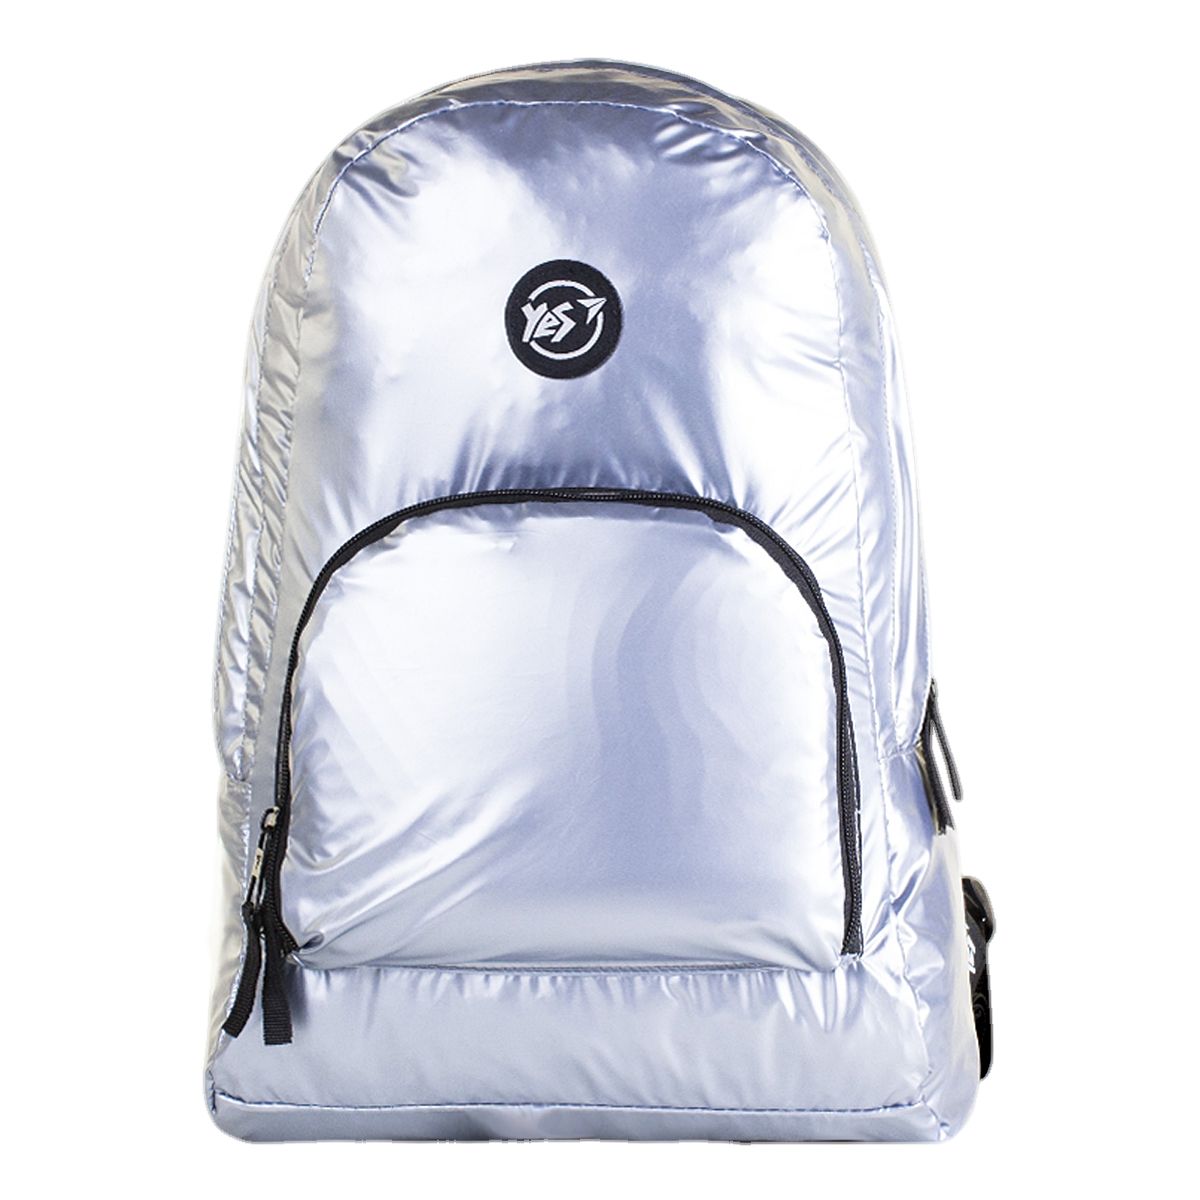 Рюкзак молодежный YES DY-15  "Ultra light" серый металик